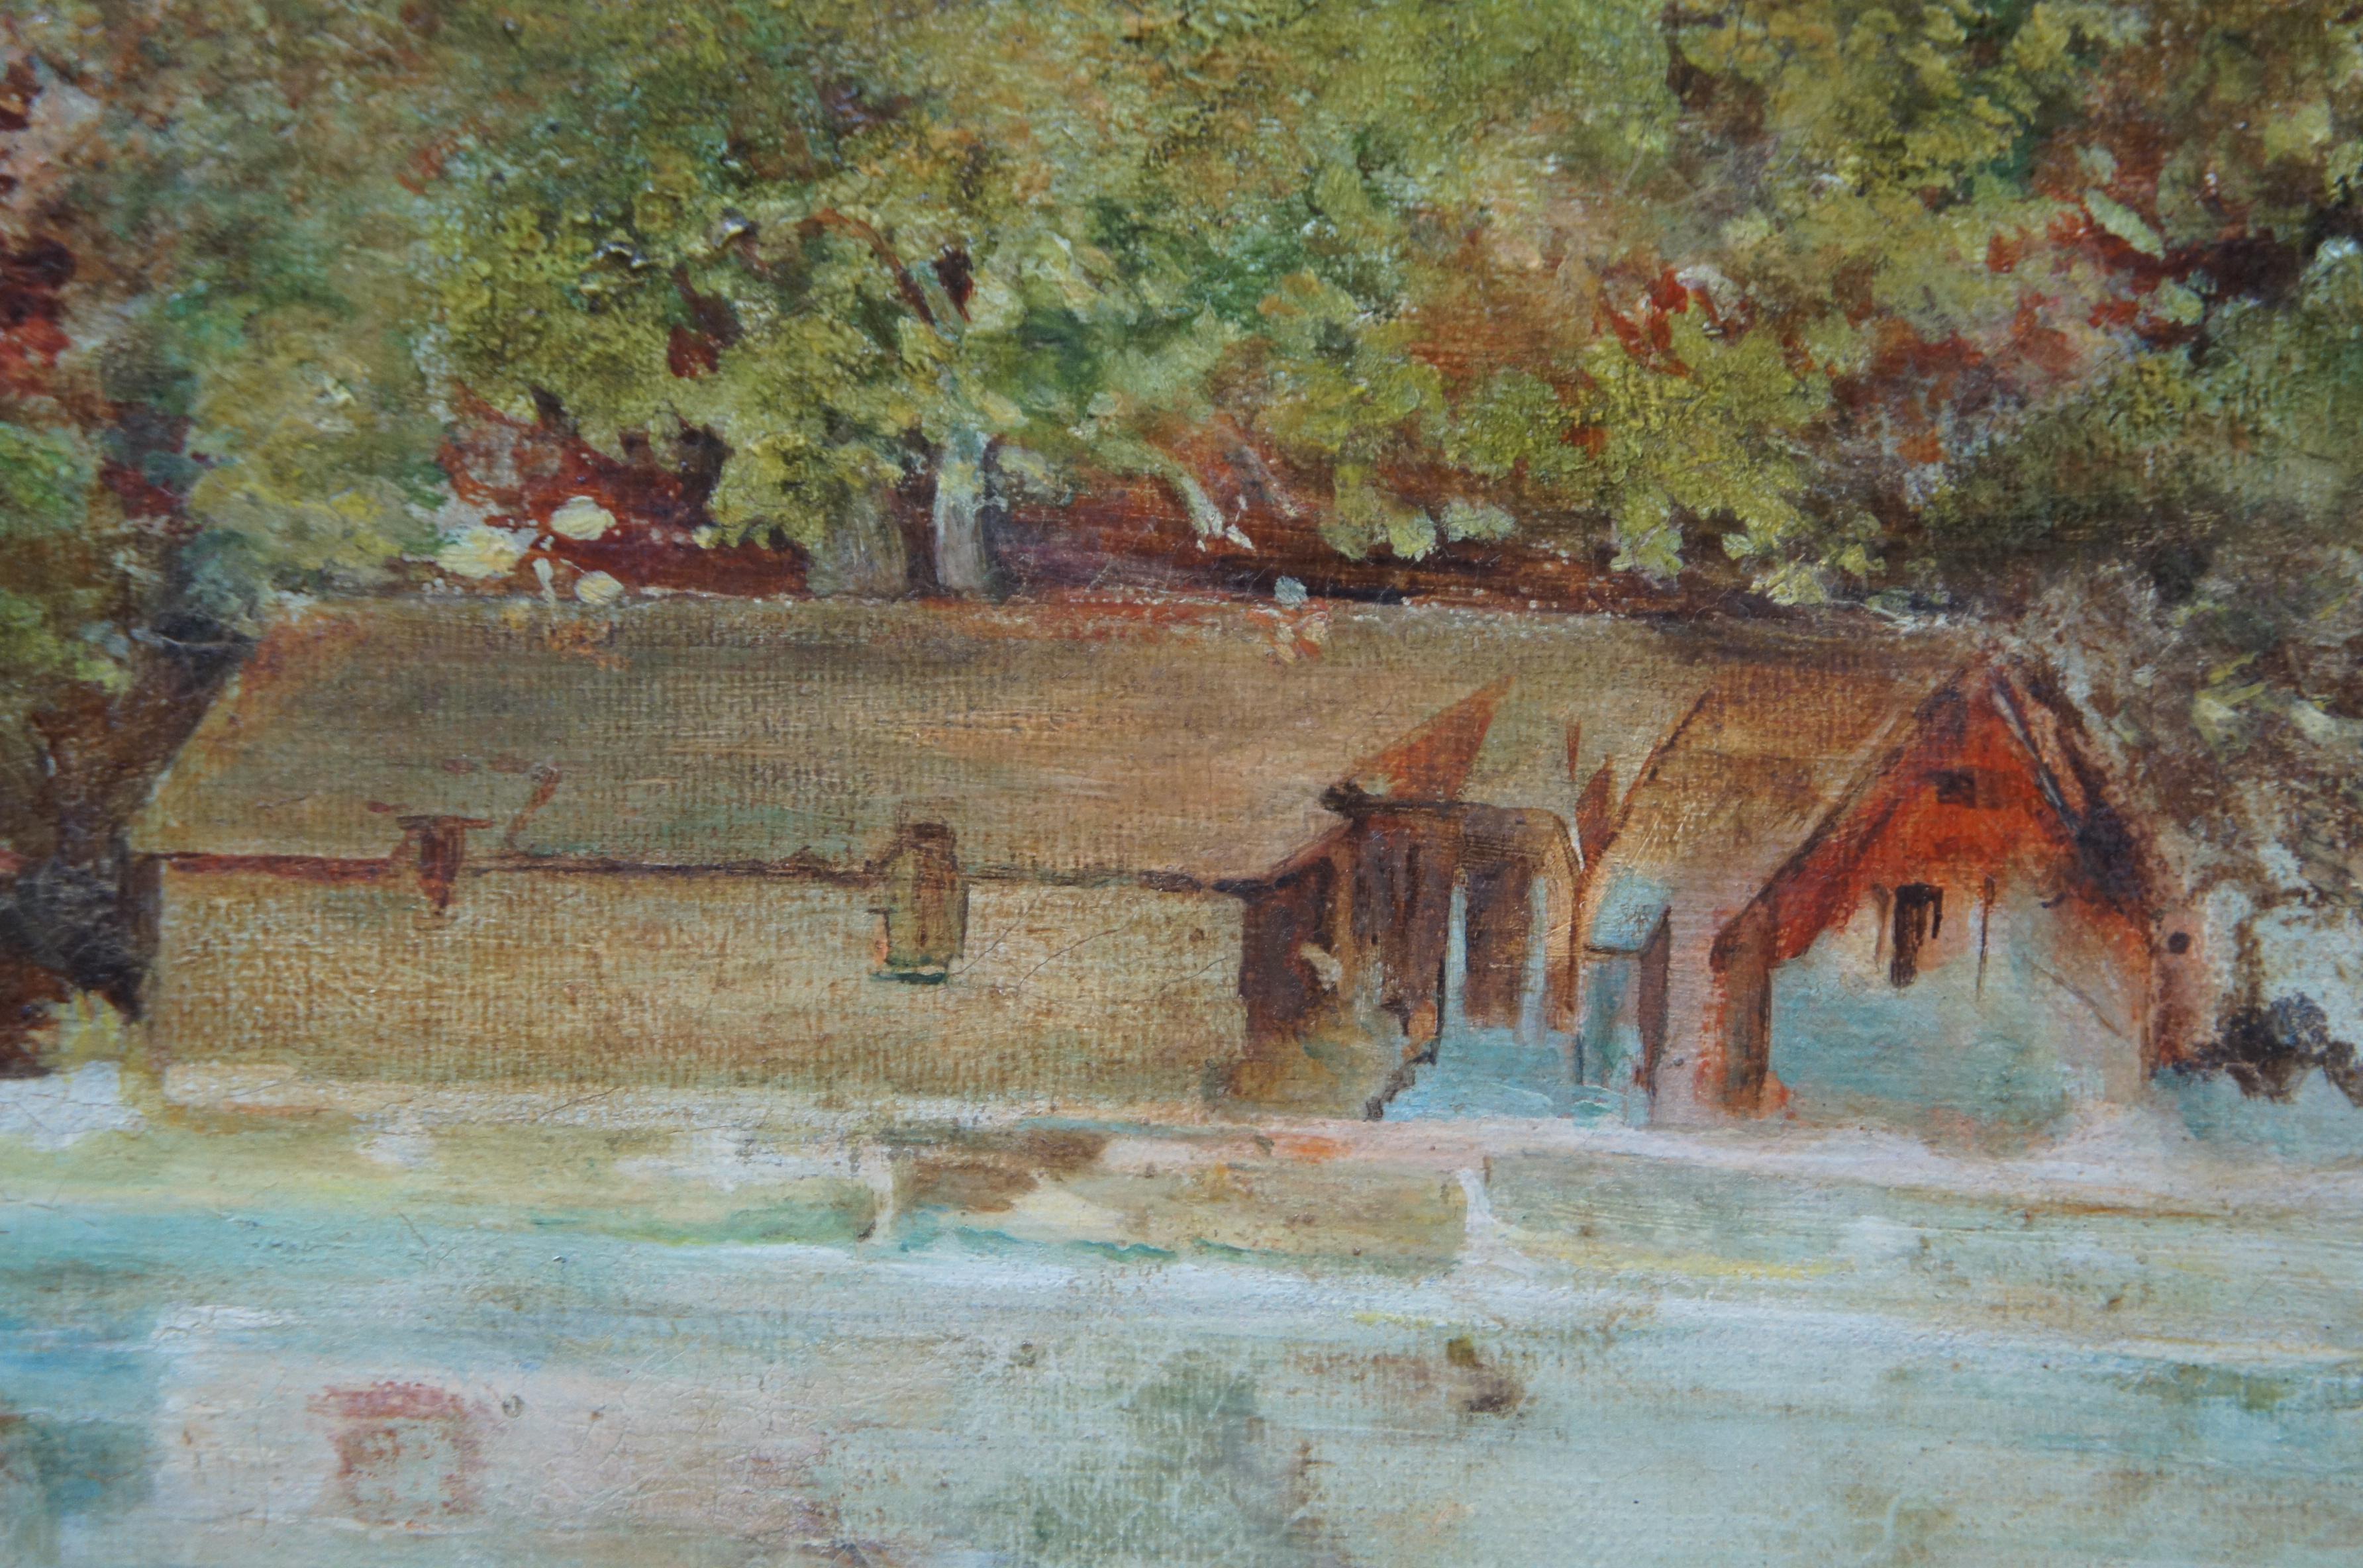 N.C. Wyeth Oil Painting University Landscape Gothic Architecture 2